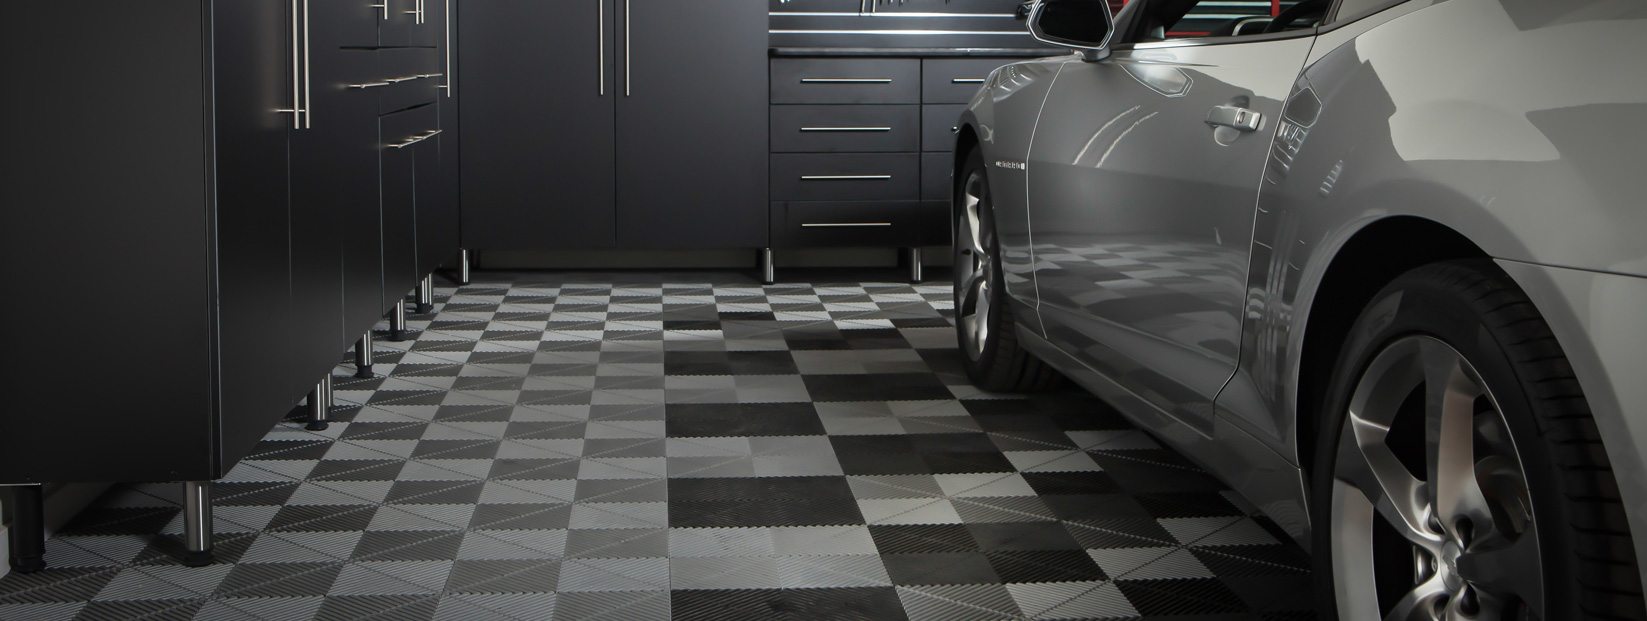 Garage Floor Tiles Boston